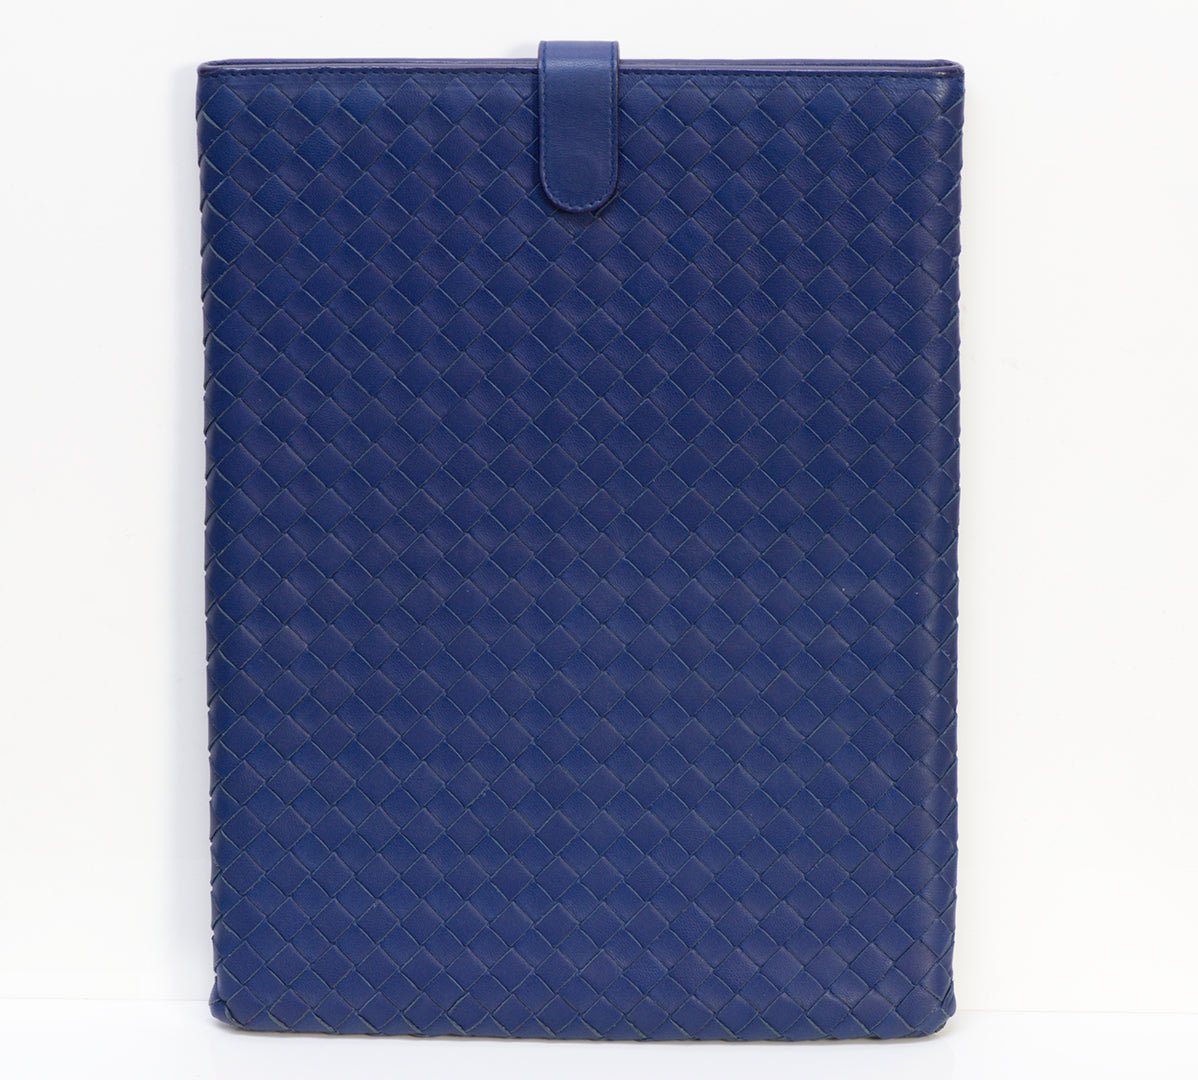 Bottega Veneta Blue Intrecciato Leather iPad Case